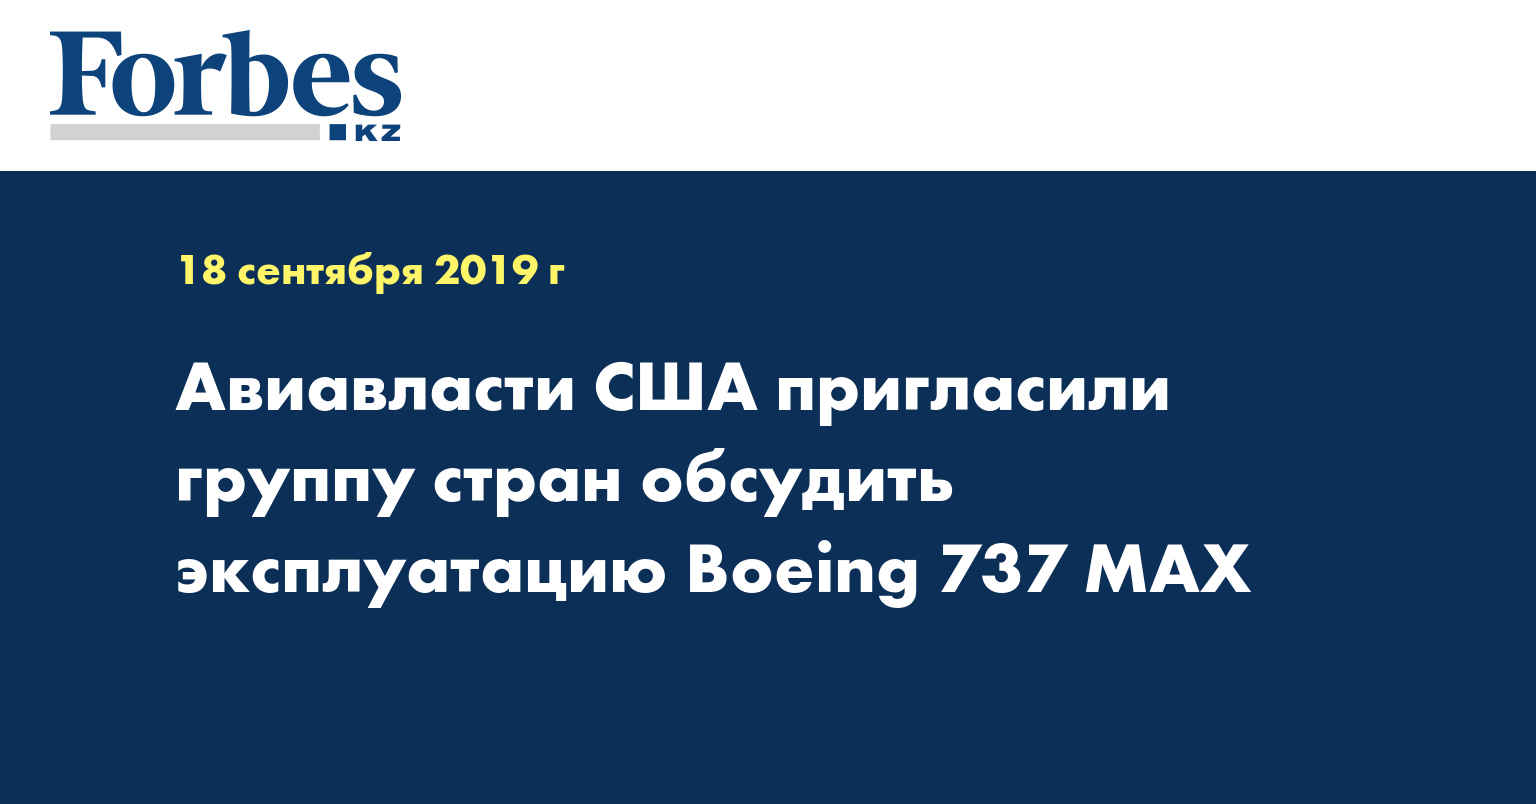 Авиавласти США пригласили группу стран обсудить эксплуатацию Boeing 737 MAX